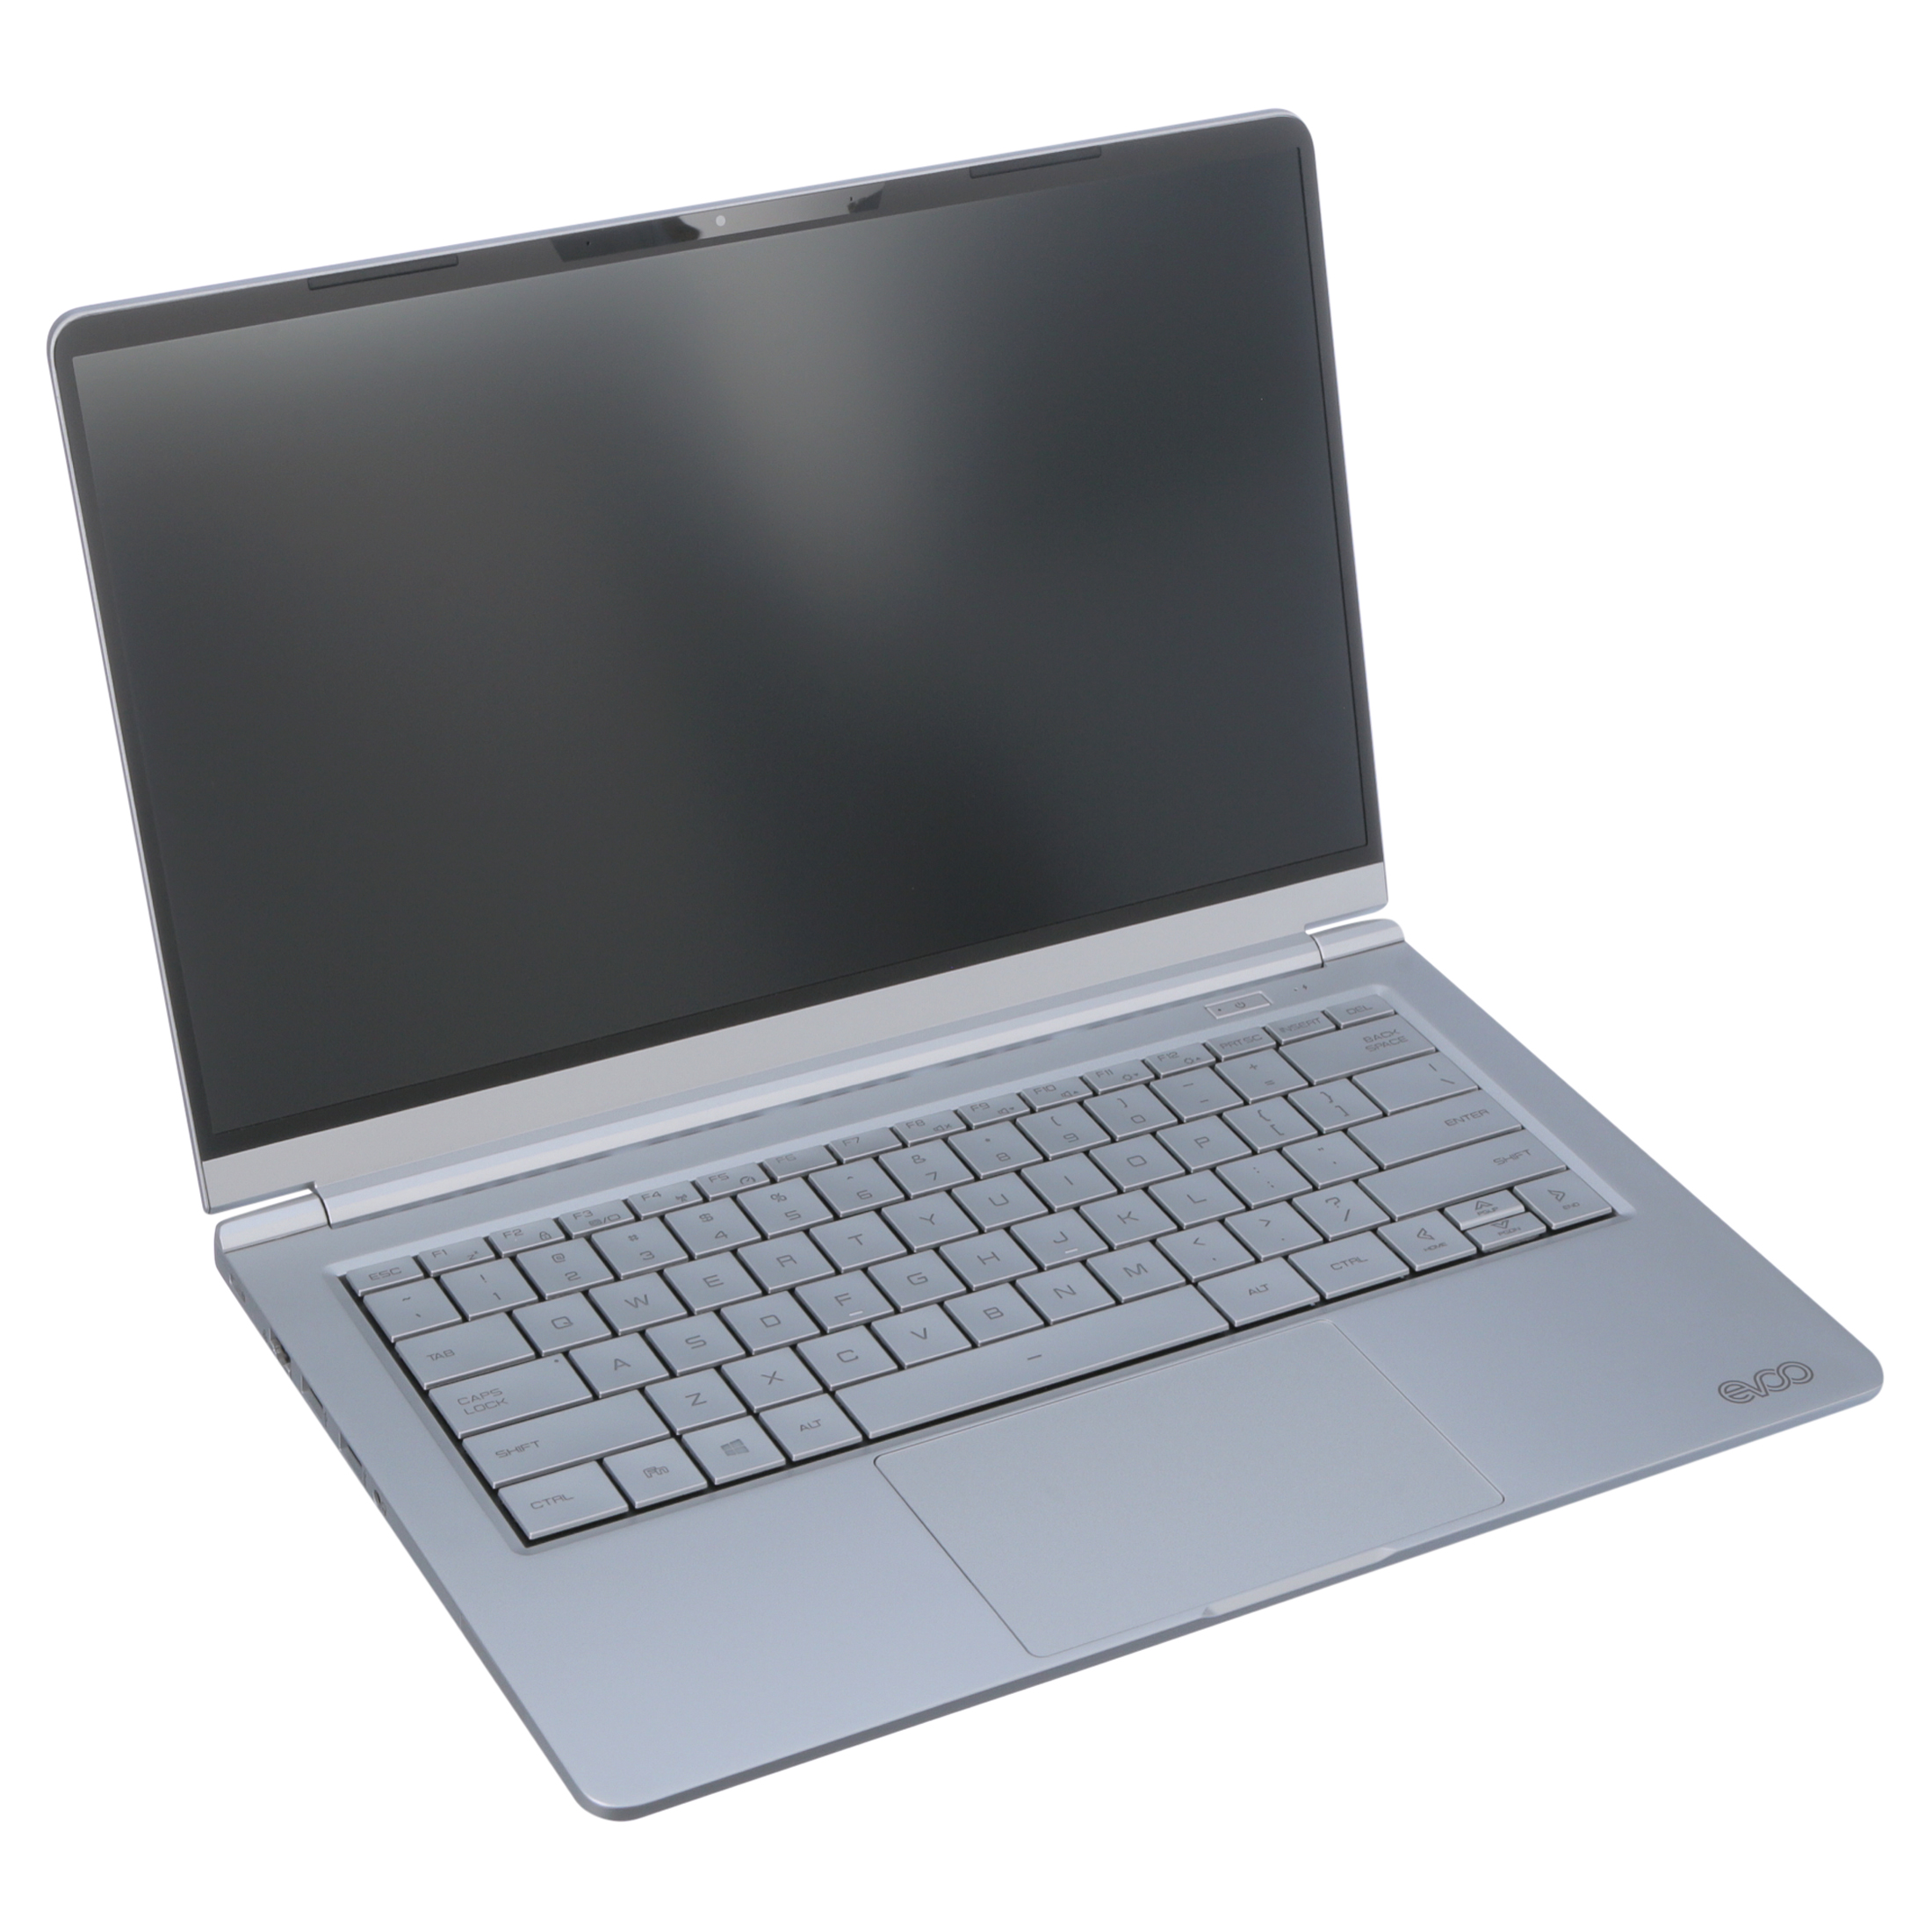 EVOO 14.1” Ultra Slim Notebook - Elite Series, FHD Display, AMD Ryzen 5 3500U Processor with Radeon Vega 8 Graphics, 8GB RAM, 256GB SSD, HD Webcam, Windows 10 Home, Silver - image 5 of 9